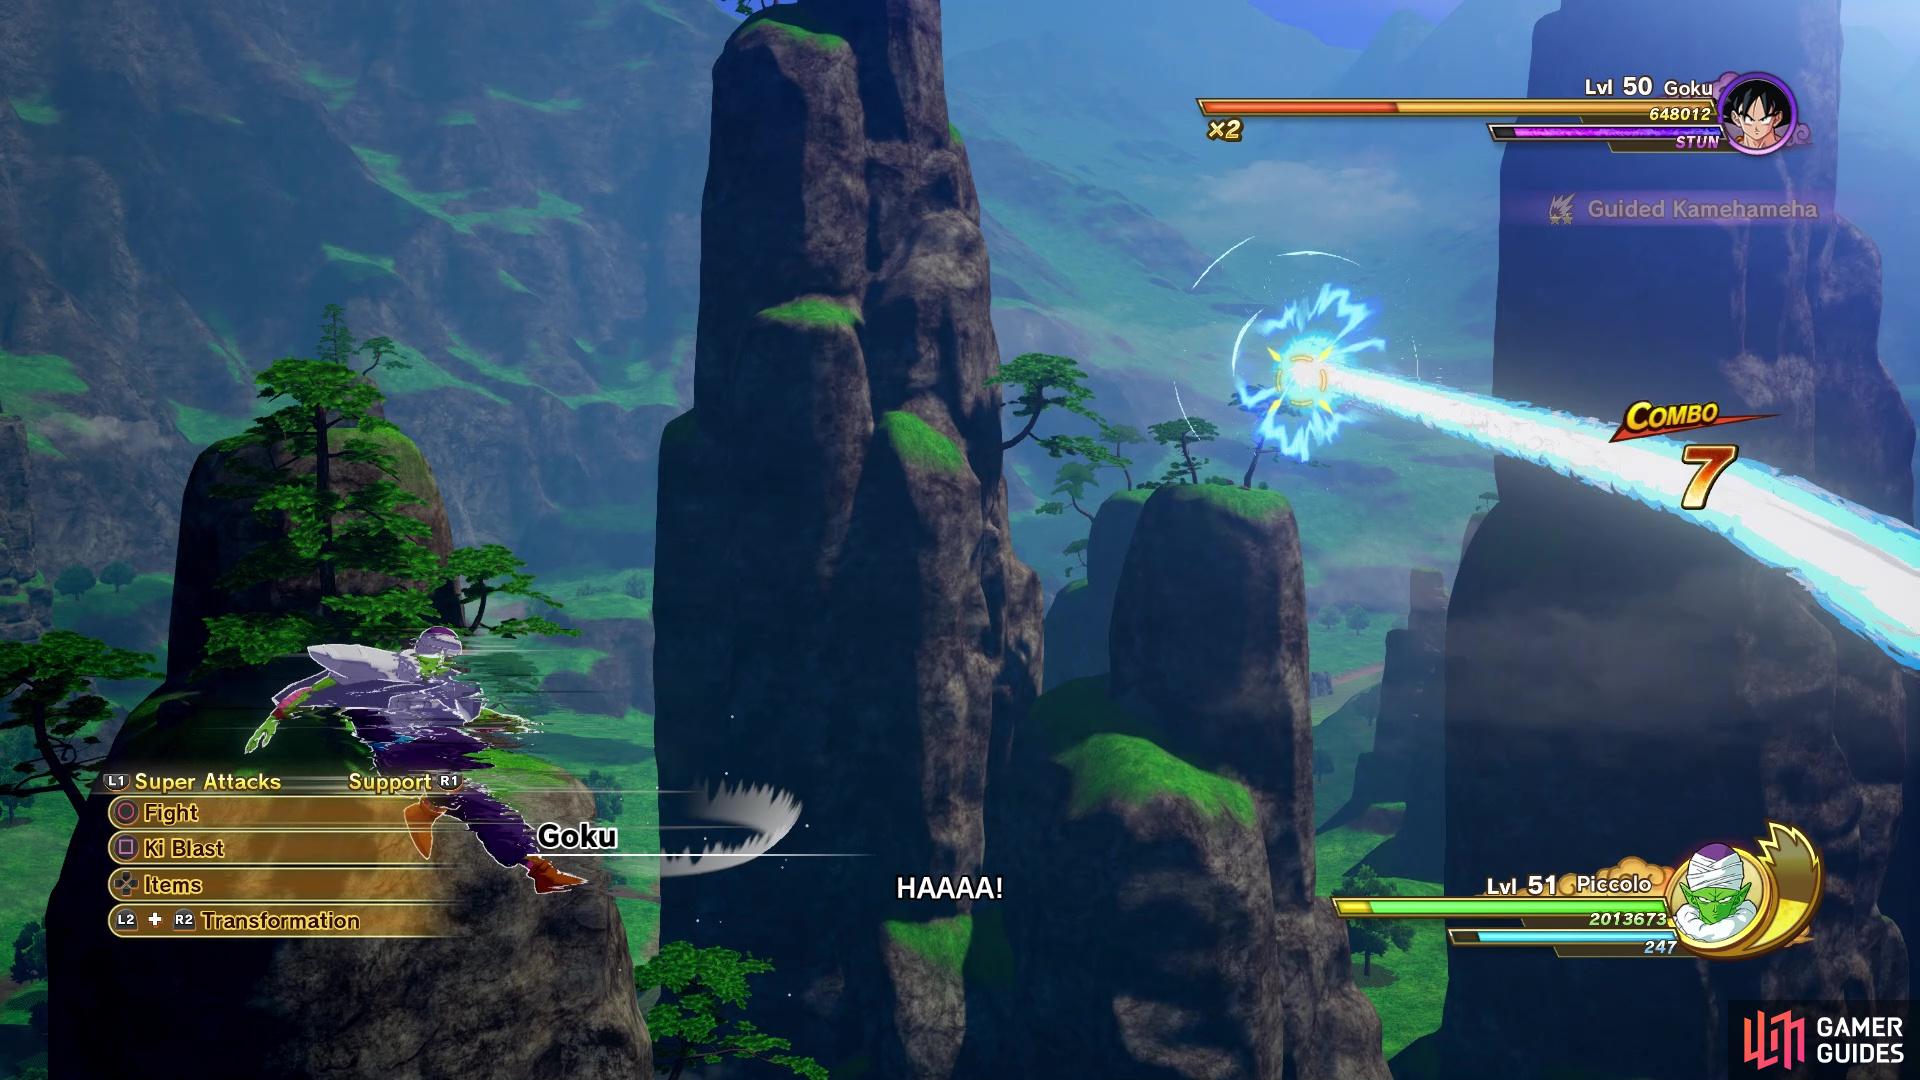 Goku’s Kamehameha attacks are pretty telegraphed